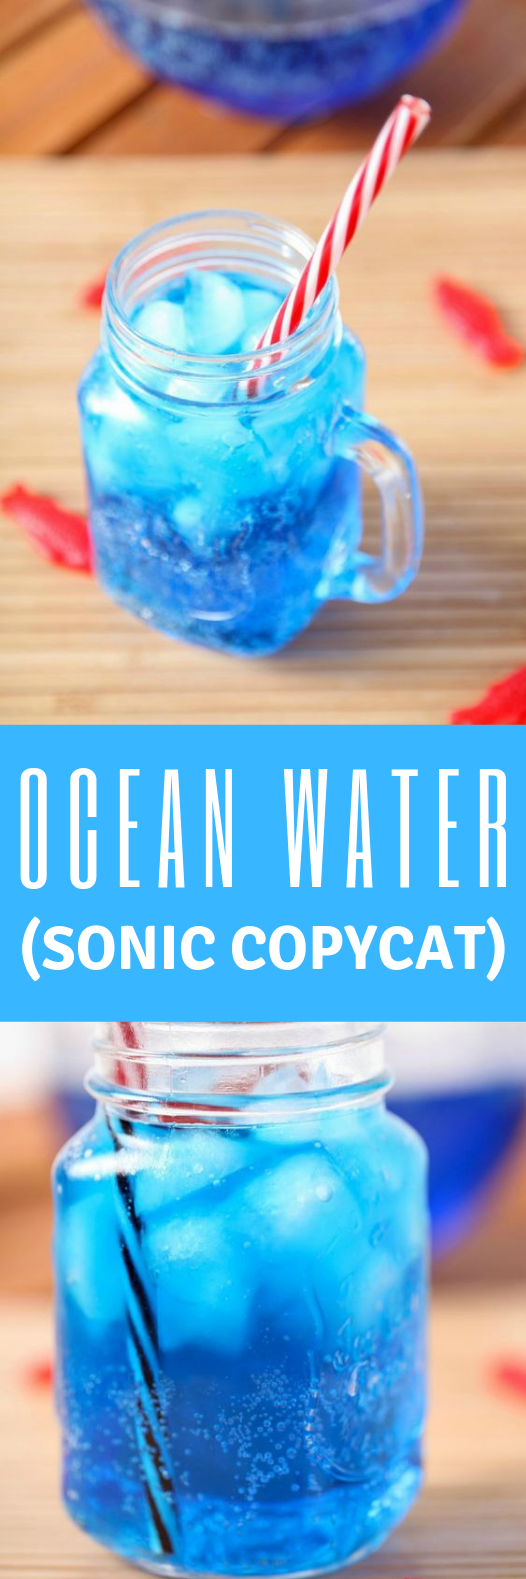 SONIC OCEAN WATER RECIPE #Drink #OceanWater